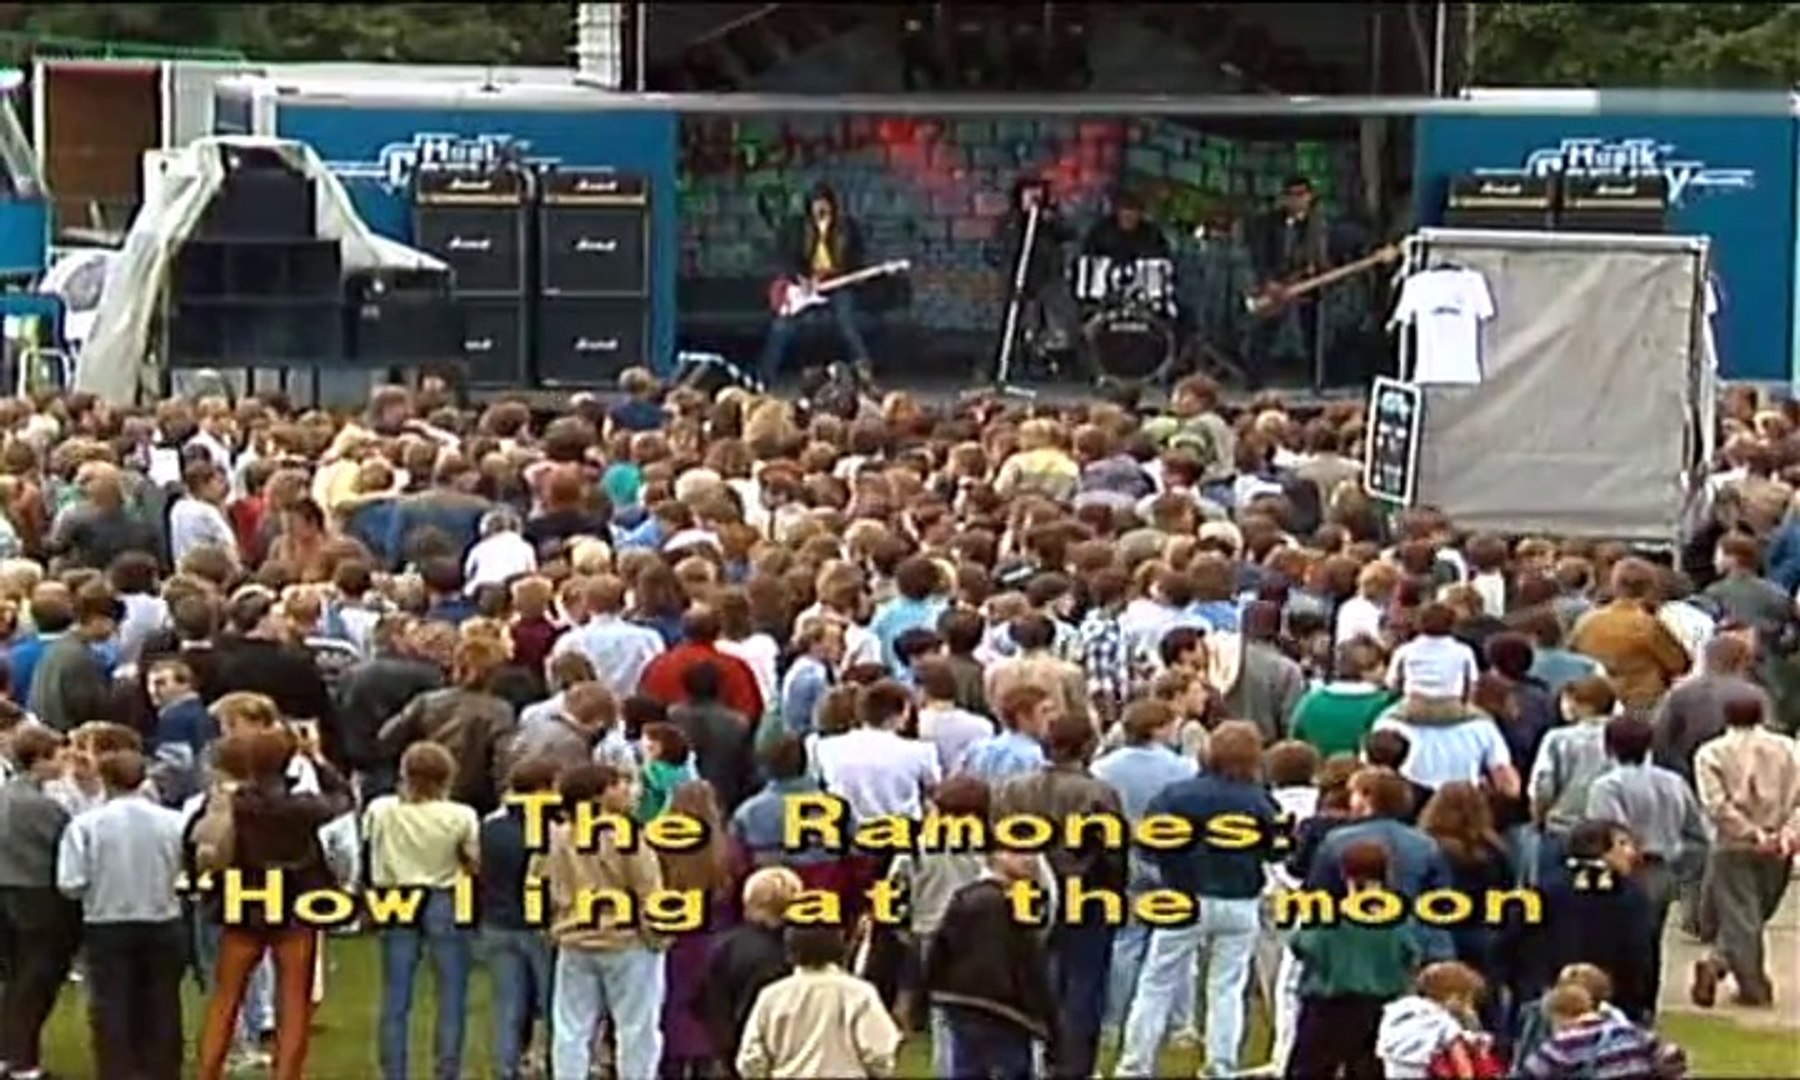 Ramones - Howling at the Moon #punkrock #ramones #ramonesfans